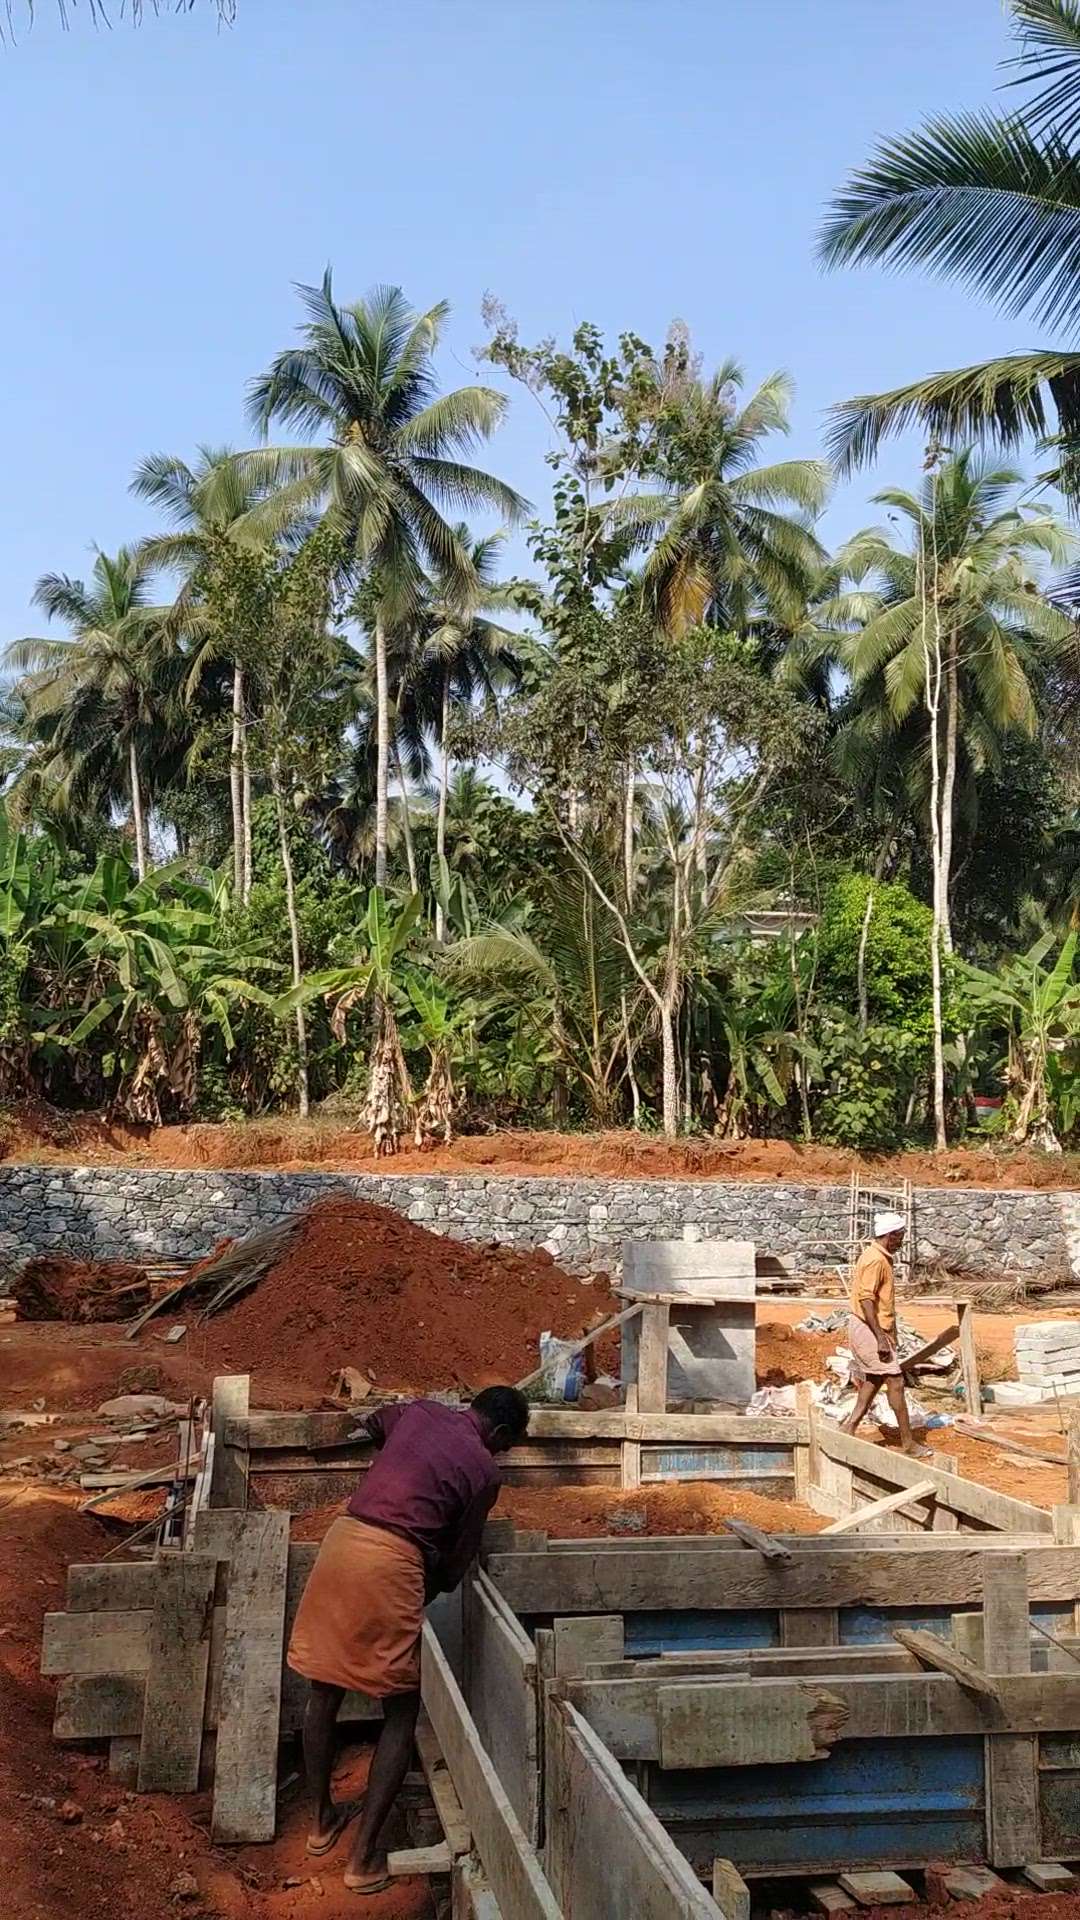 #HouseDesigns #plinthbeam 
#plinth #HouseConstruction #KeralaStyleHouse #keralaplanners #kerala_architecture #keralagram